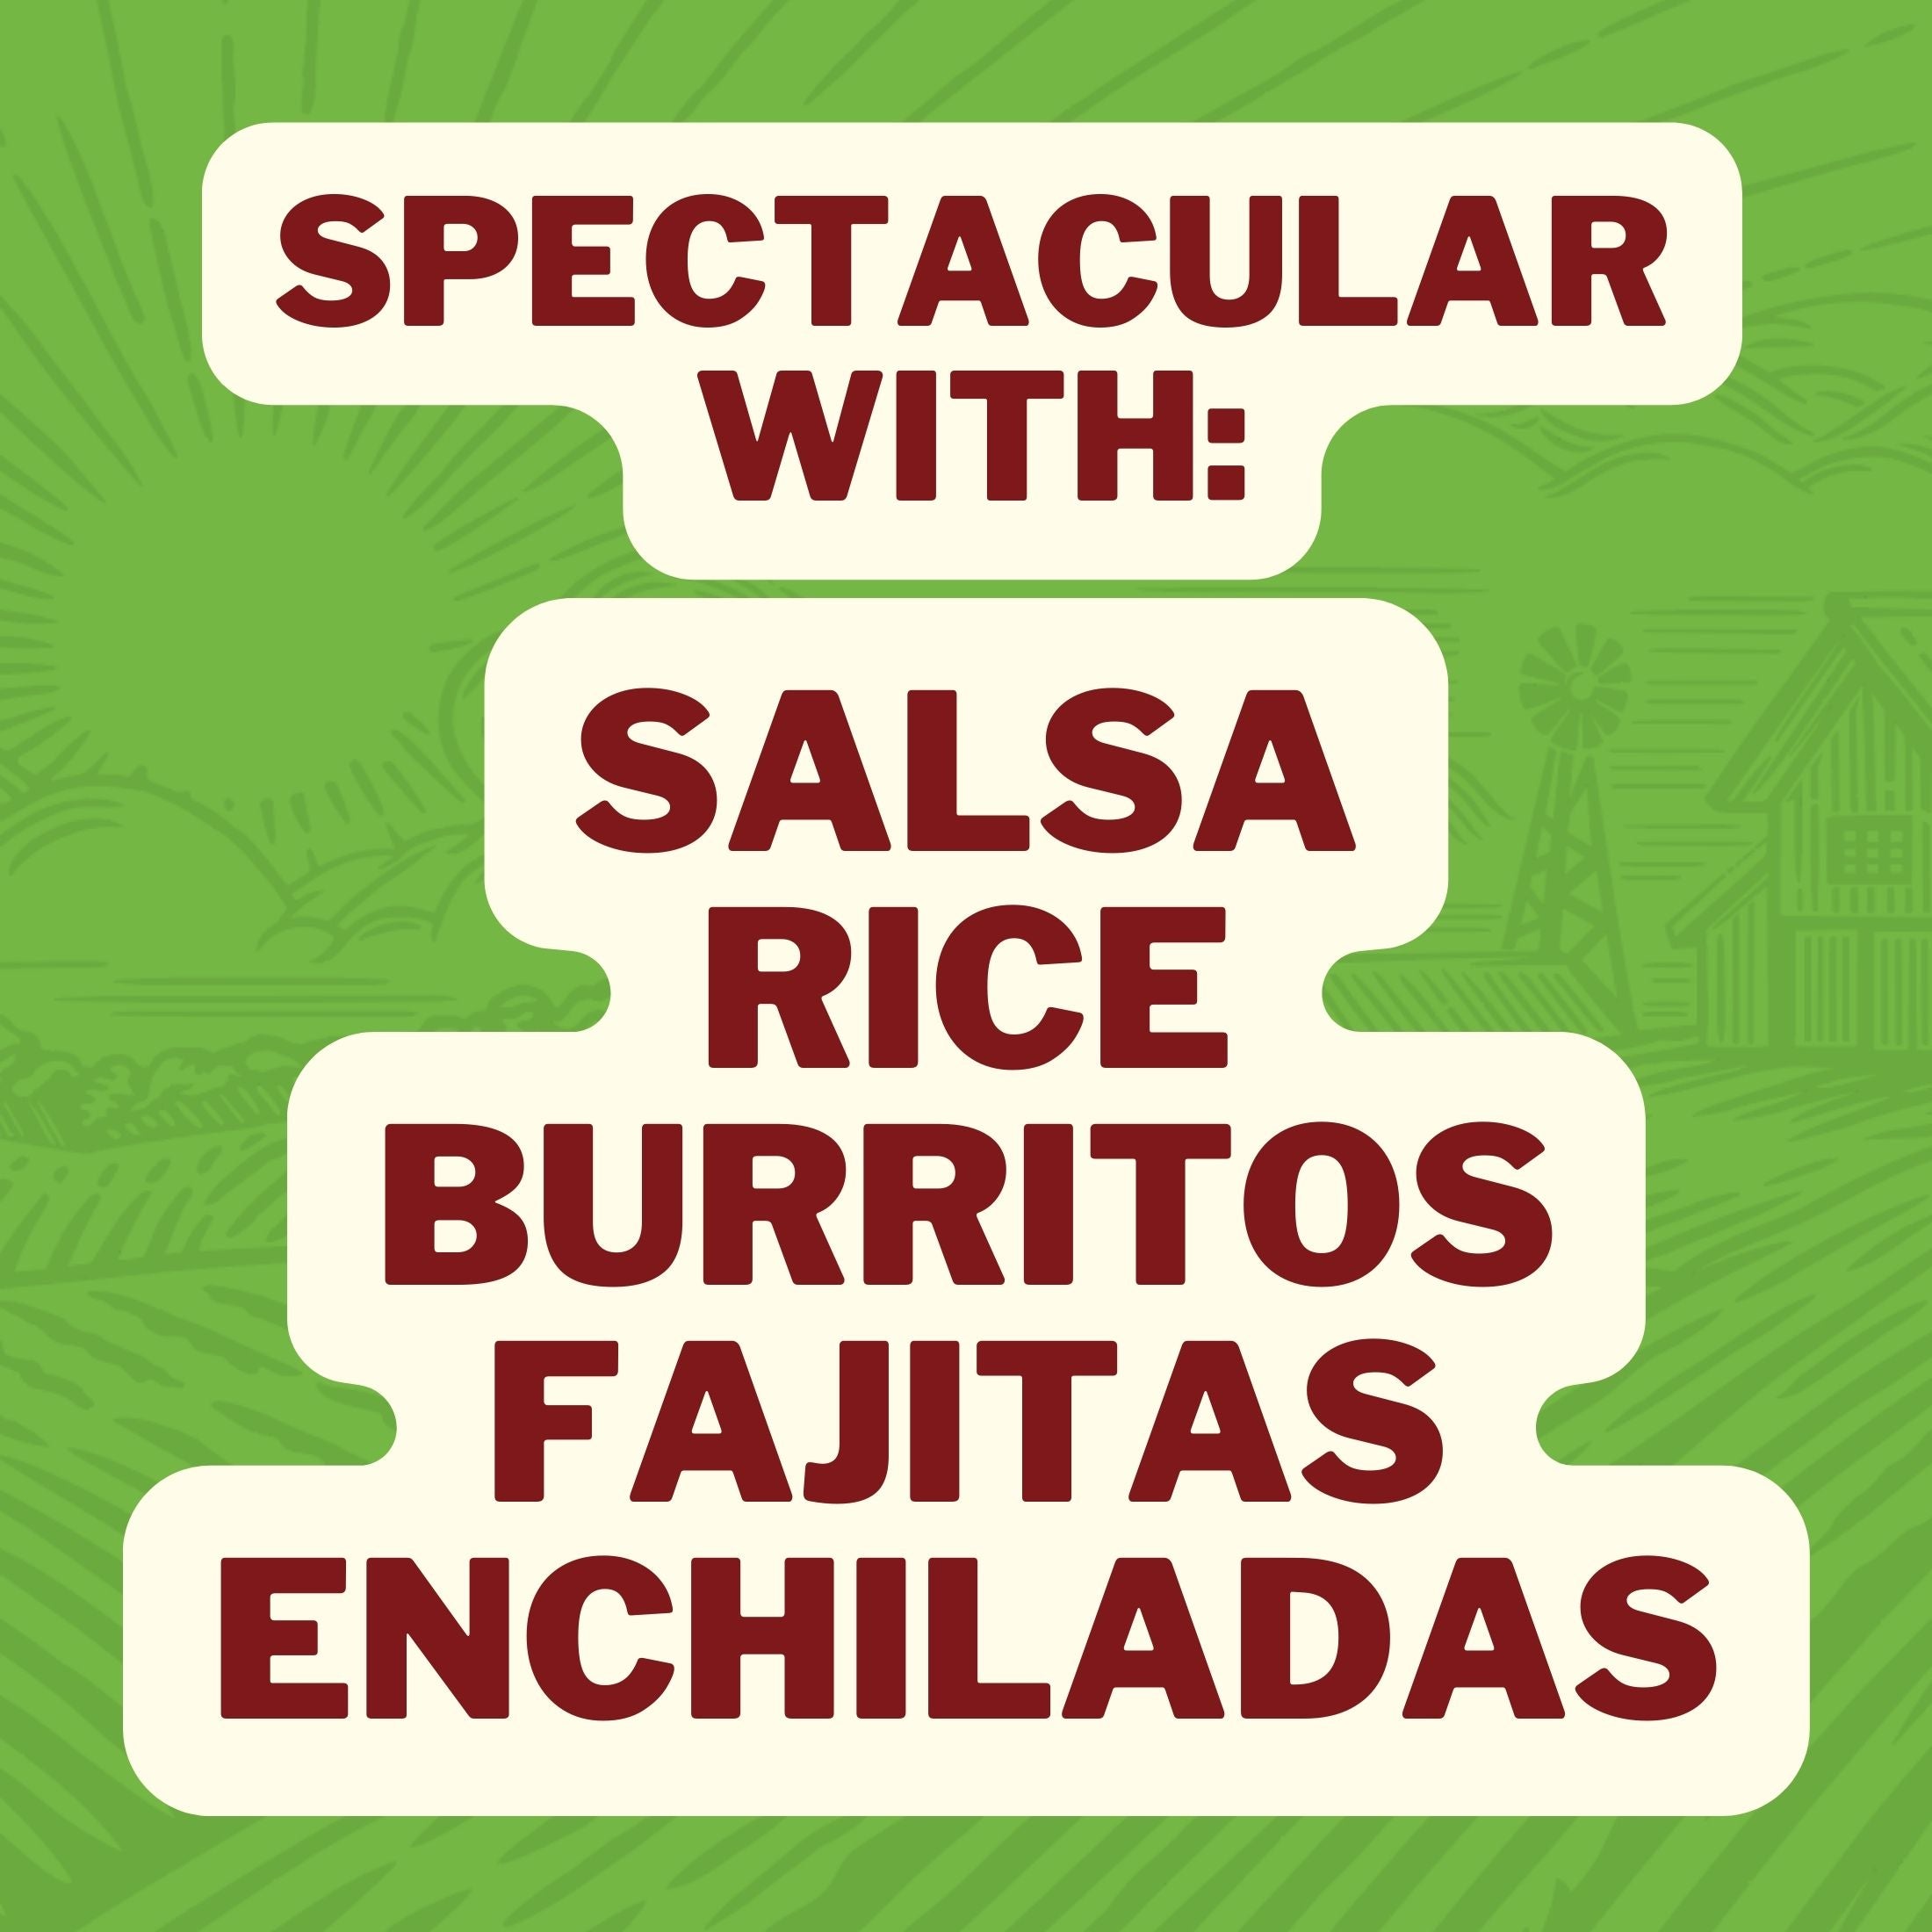 Taco Seasoning is Spectacular on: Salsa Rice Burritos Fajitas Enchiladas